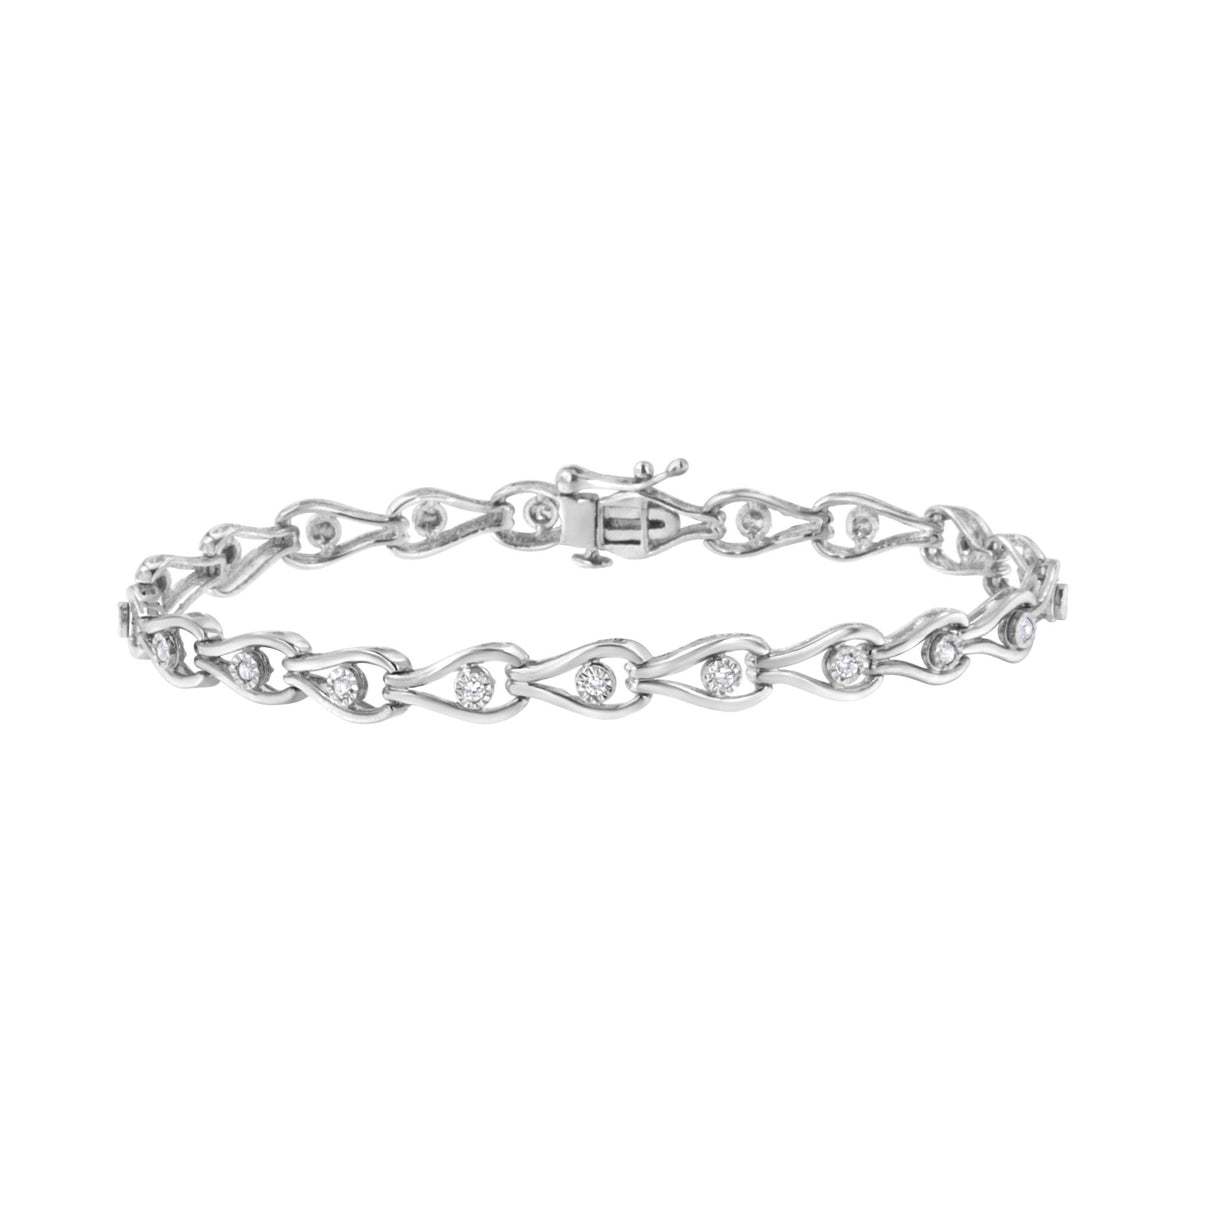 .925 Sterling Silver 1/10 Cttw Miracle-Set Diamond Pear Shape And Bezel Link Bracelet (I-J Color, I3 Clarity) - 7.25" - Tuesday Morning-Bracelets